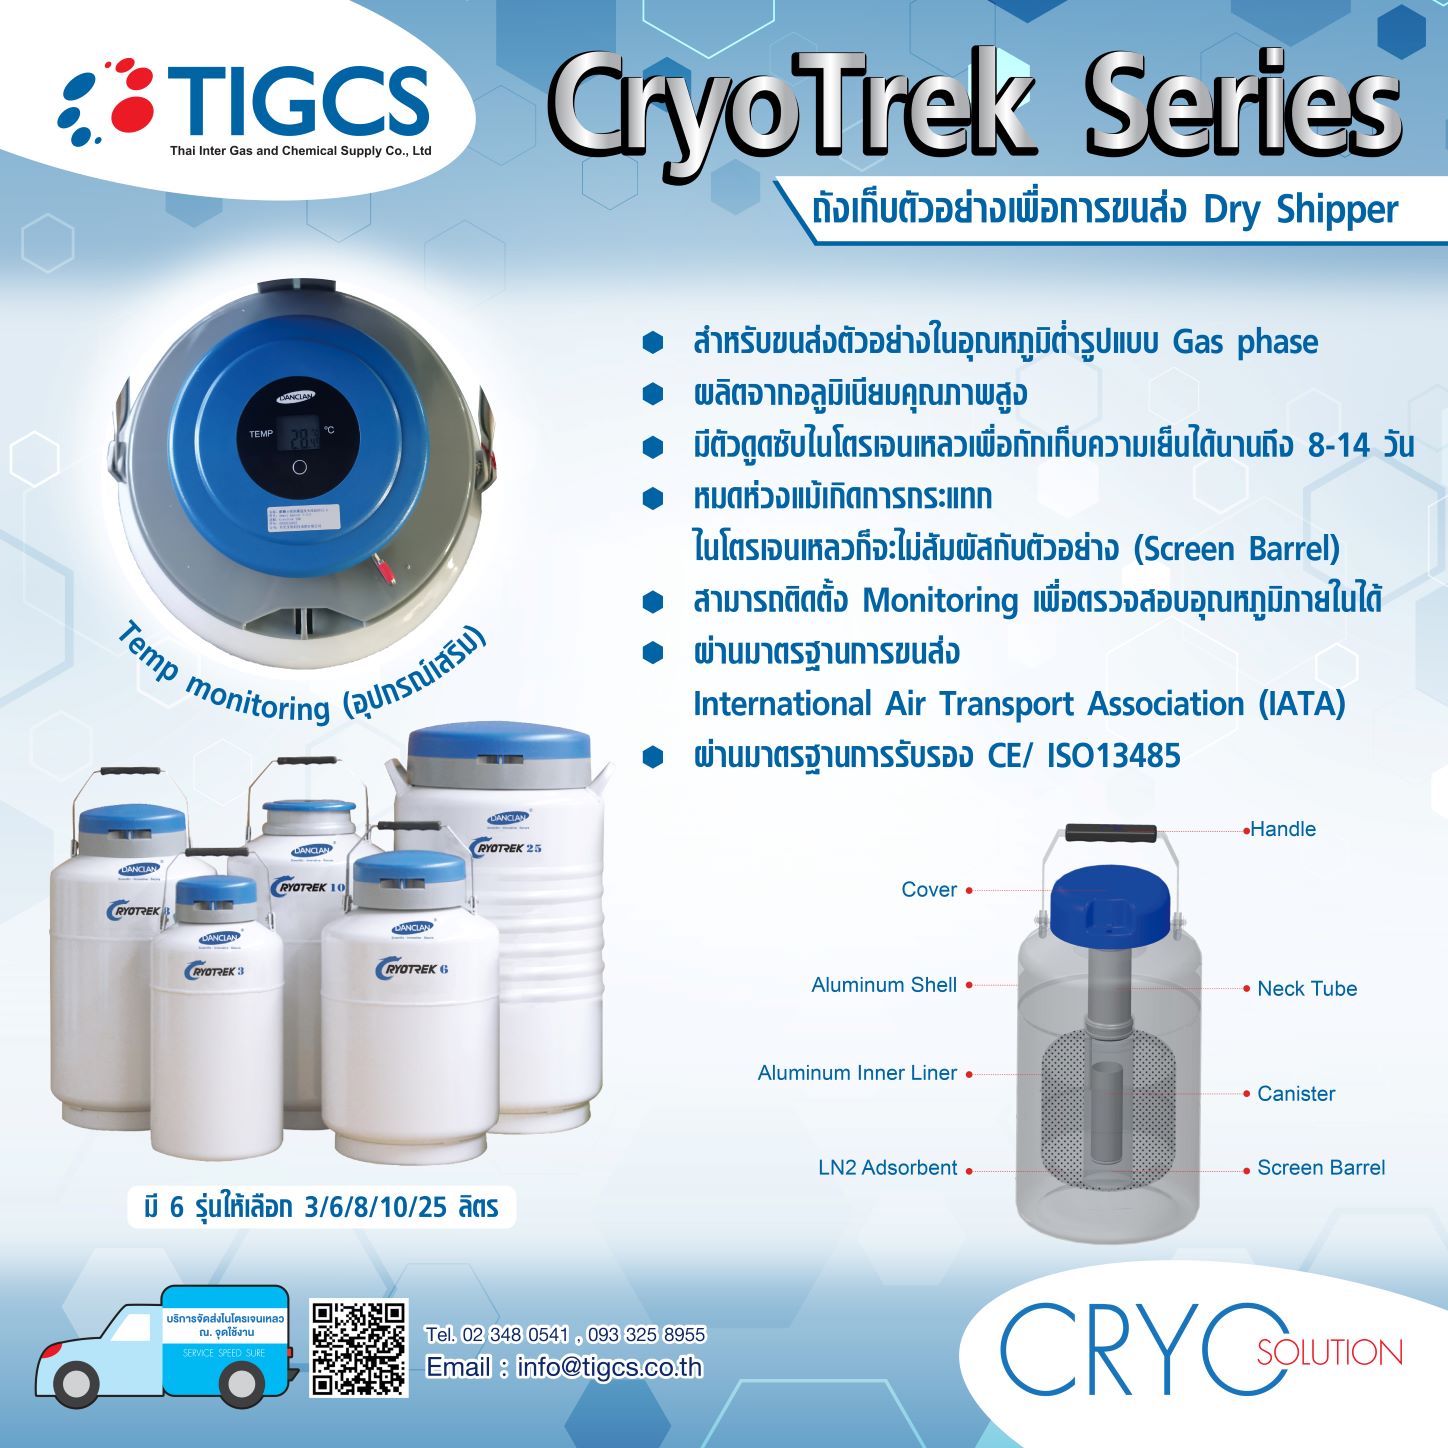 CryoTrek Series ถังเก็บตัวอย่างเพื่อการขนส่ง Dry Shipper